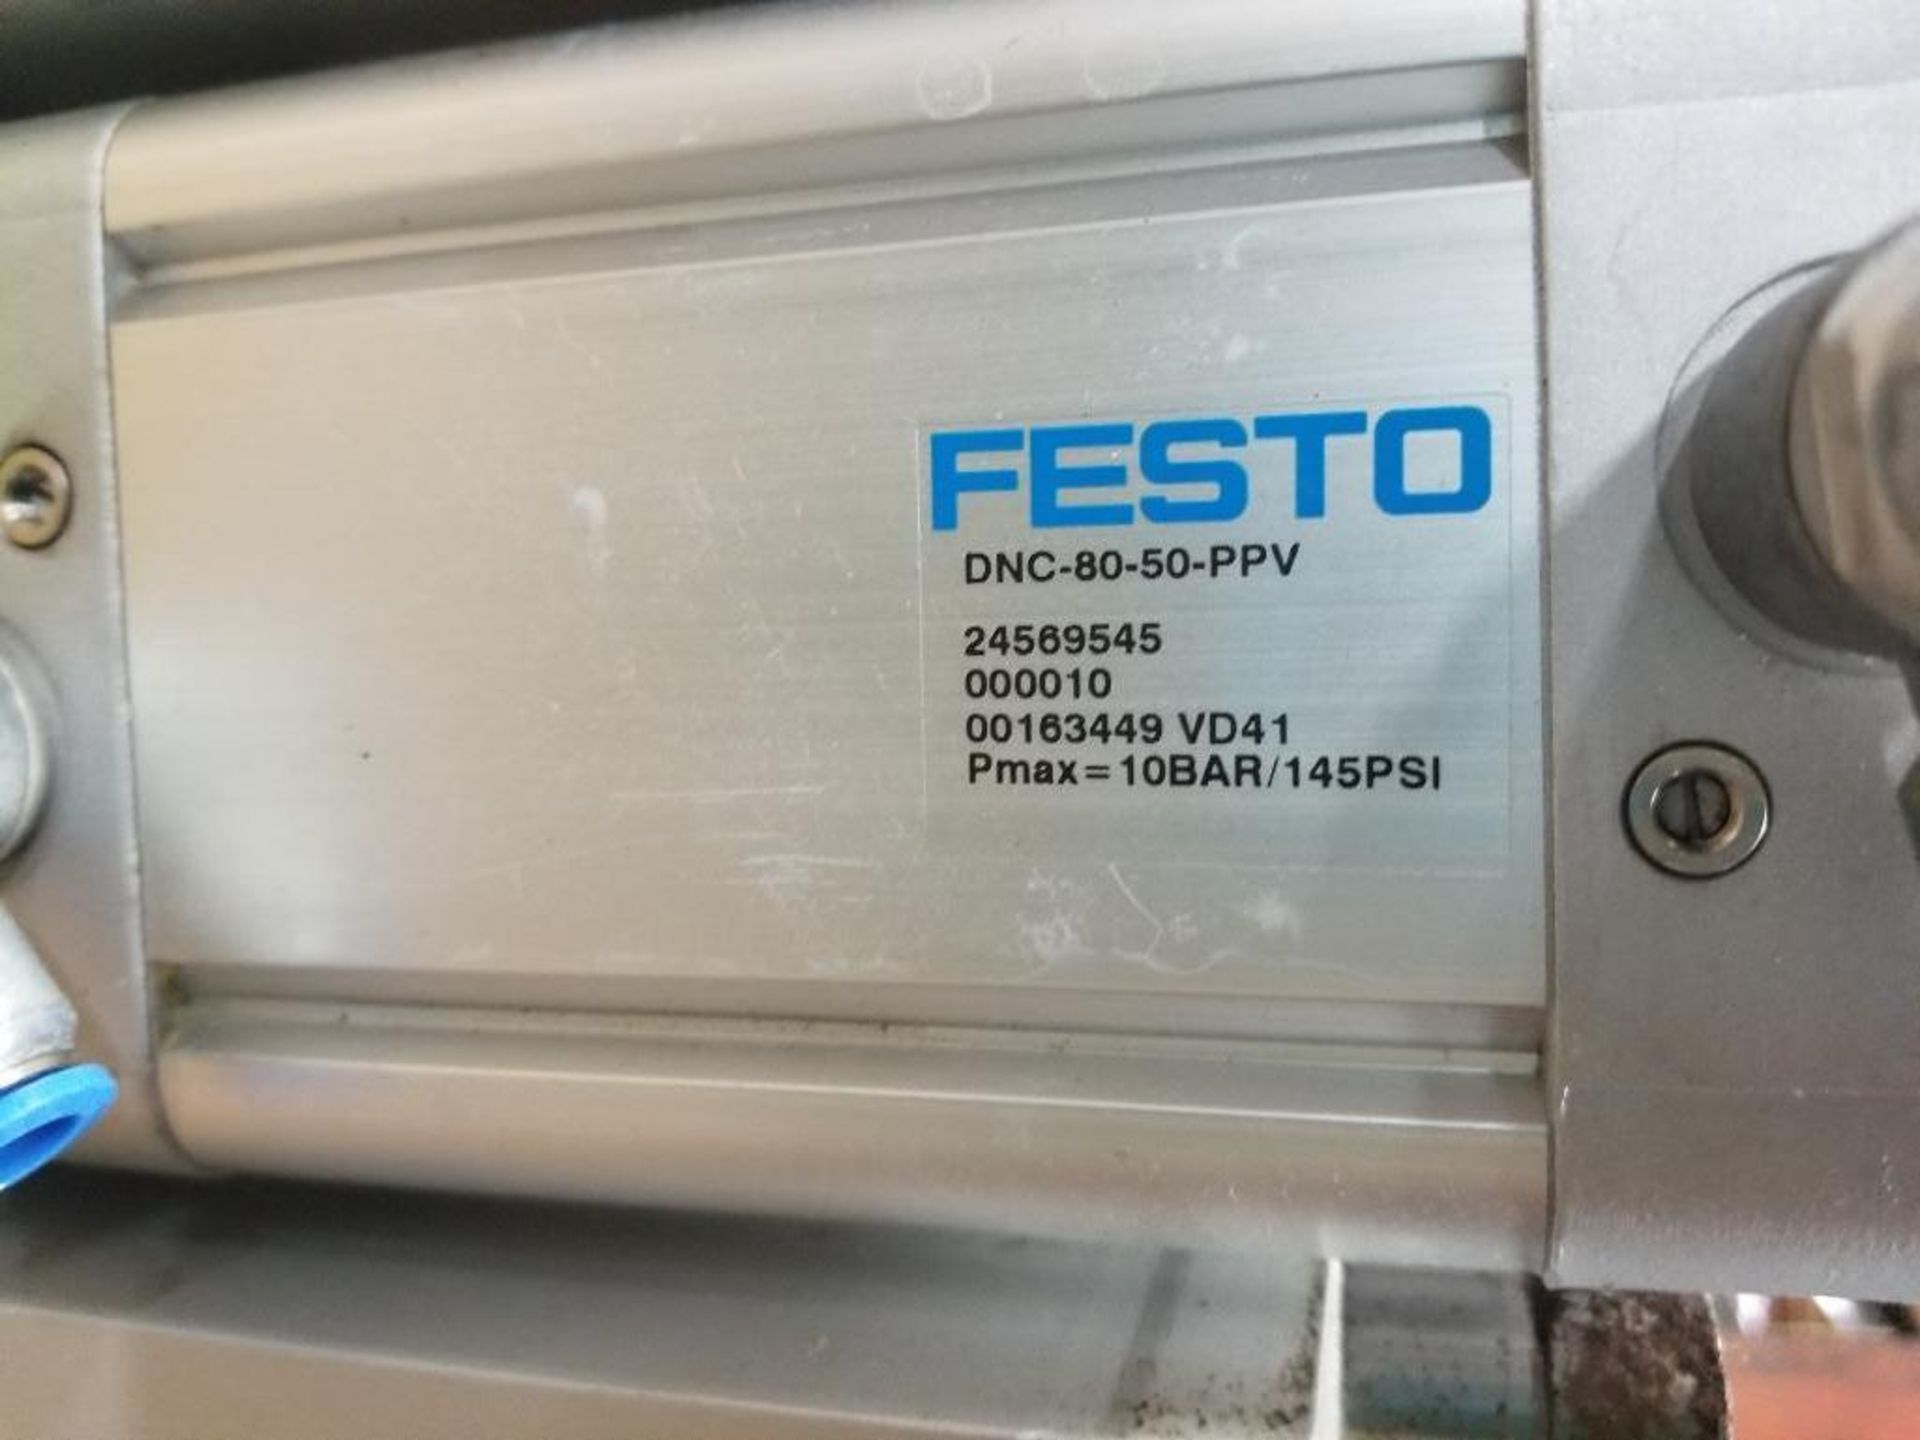 Festo pneumatic cylinder assembly. FENG-80-50-KF, DNC-80-50-PPV. - Image 5 of 7